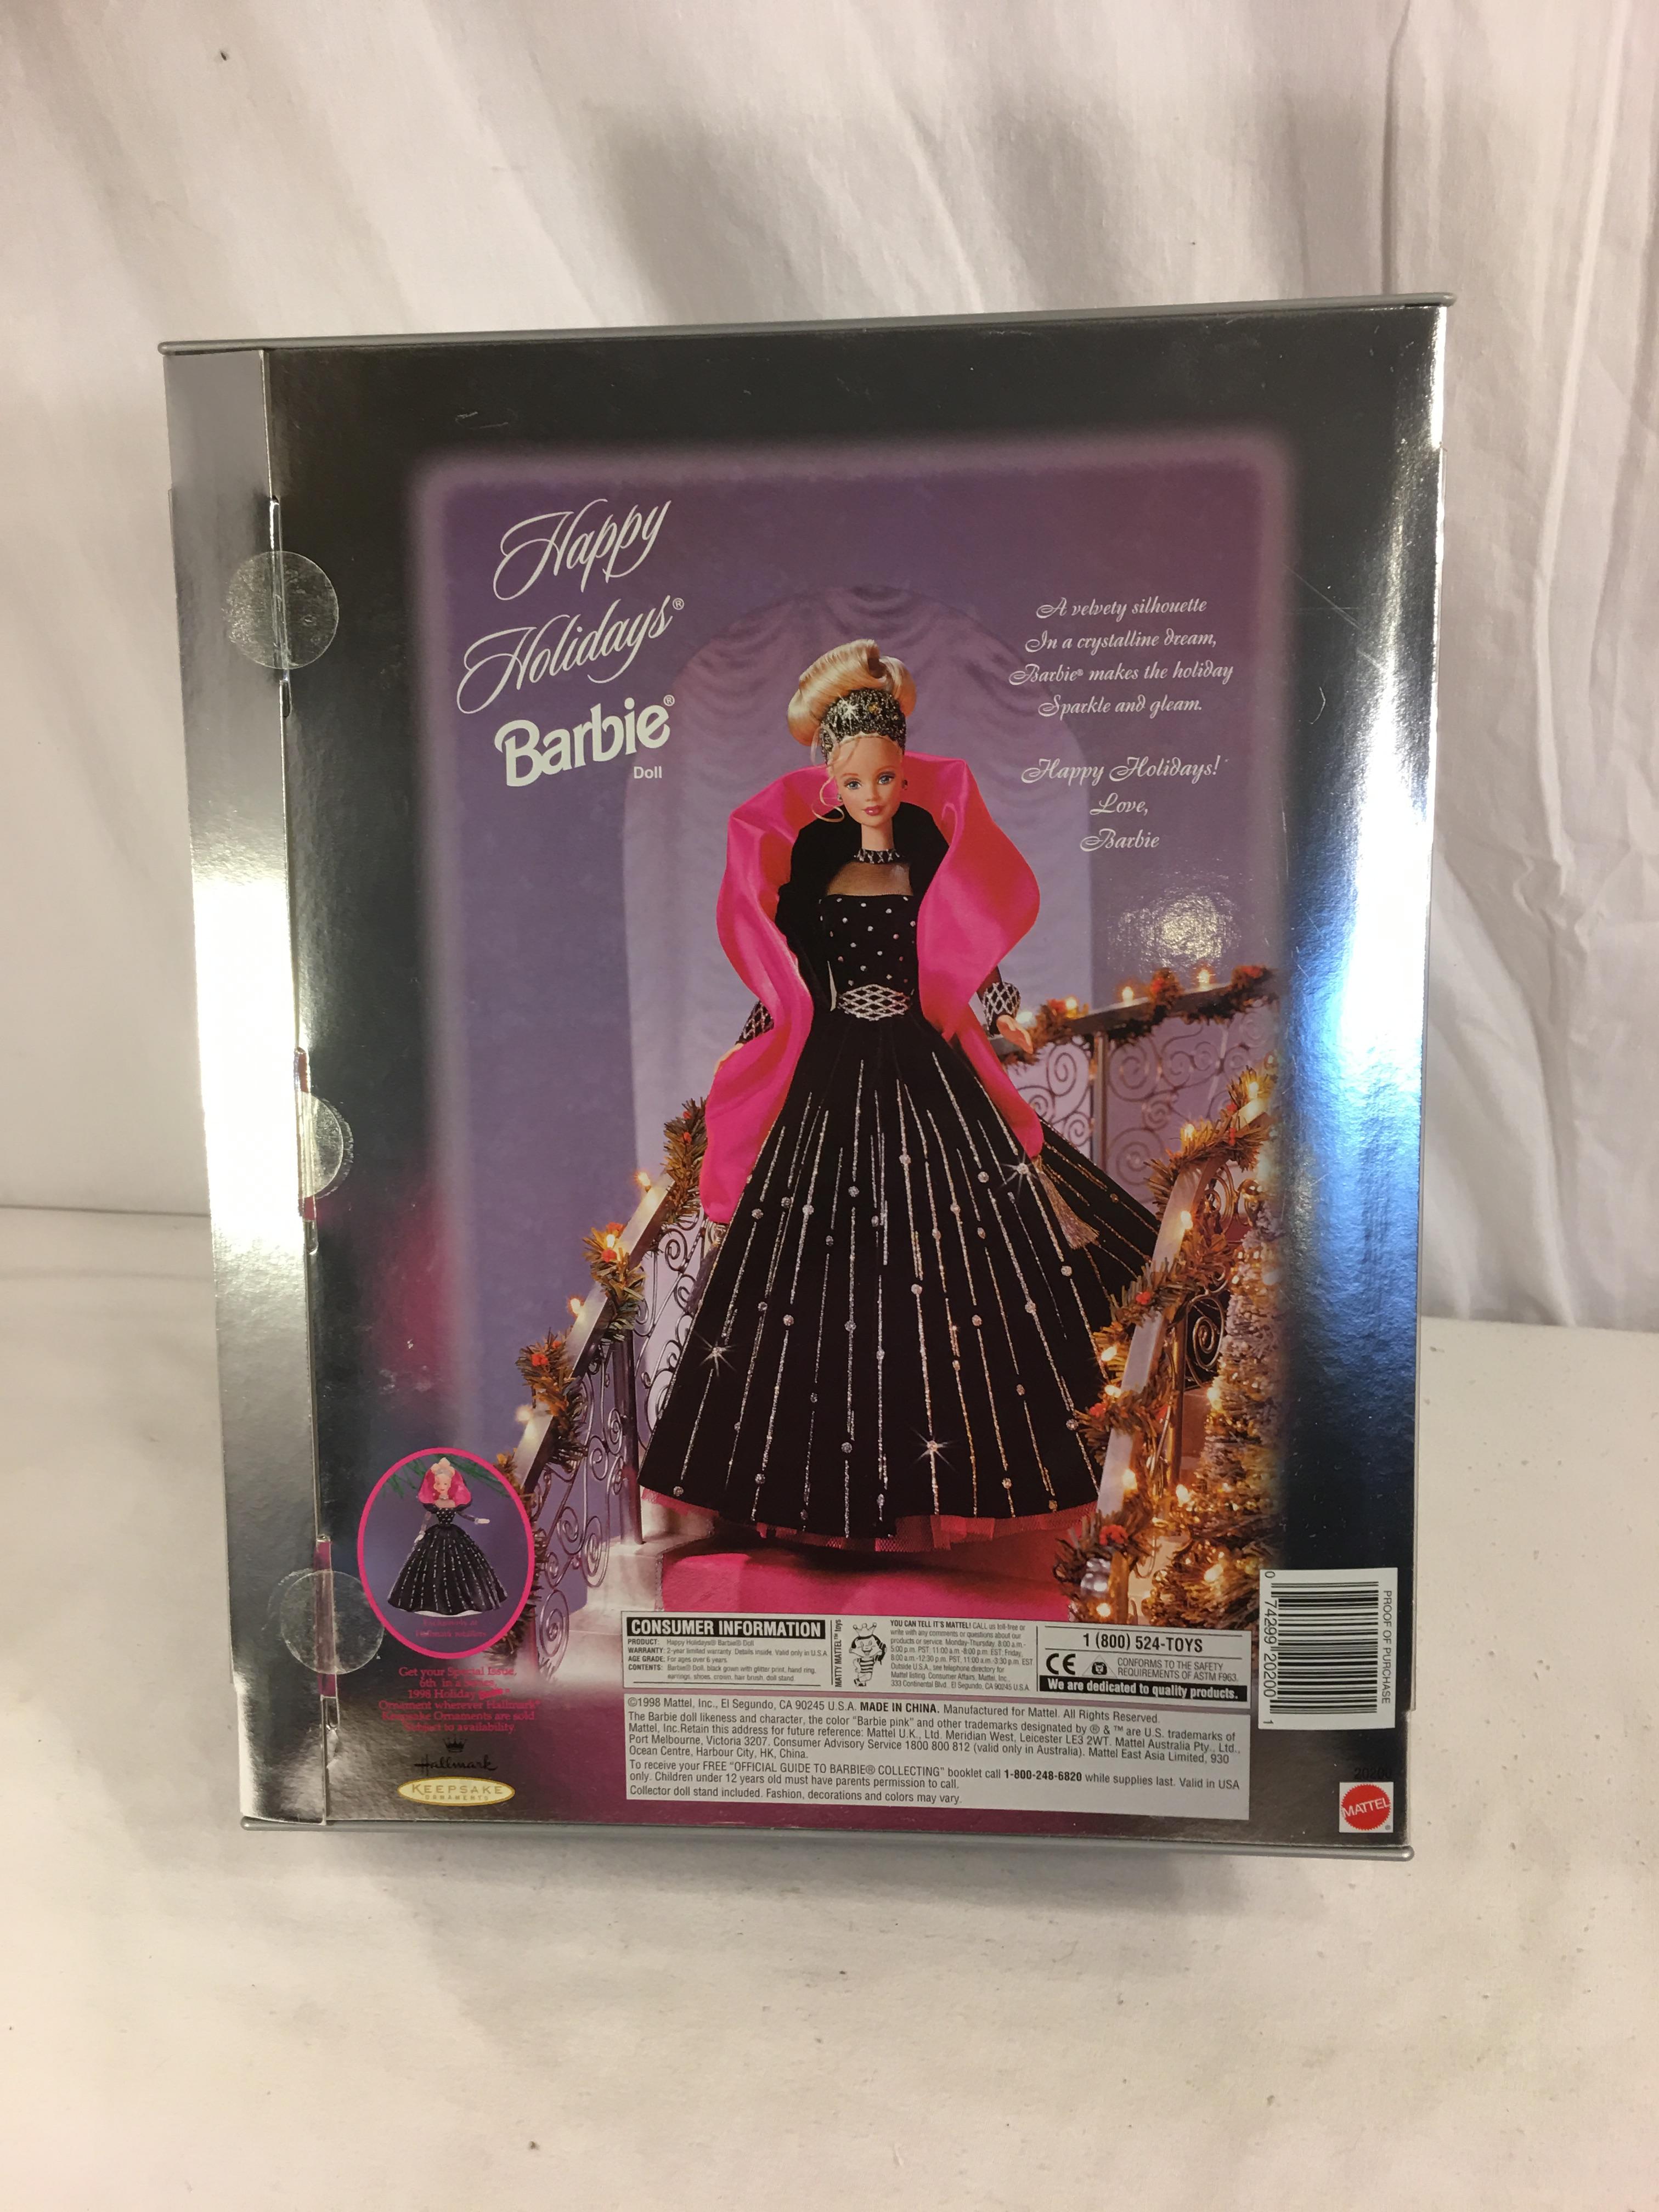 Collector NIB Barbie Special Edition Happy Holidays Barbie Mattel Doll 14"Tall Box